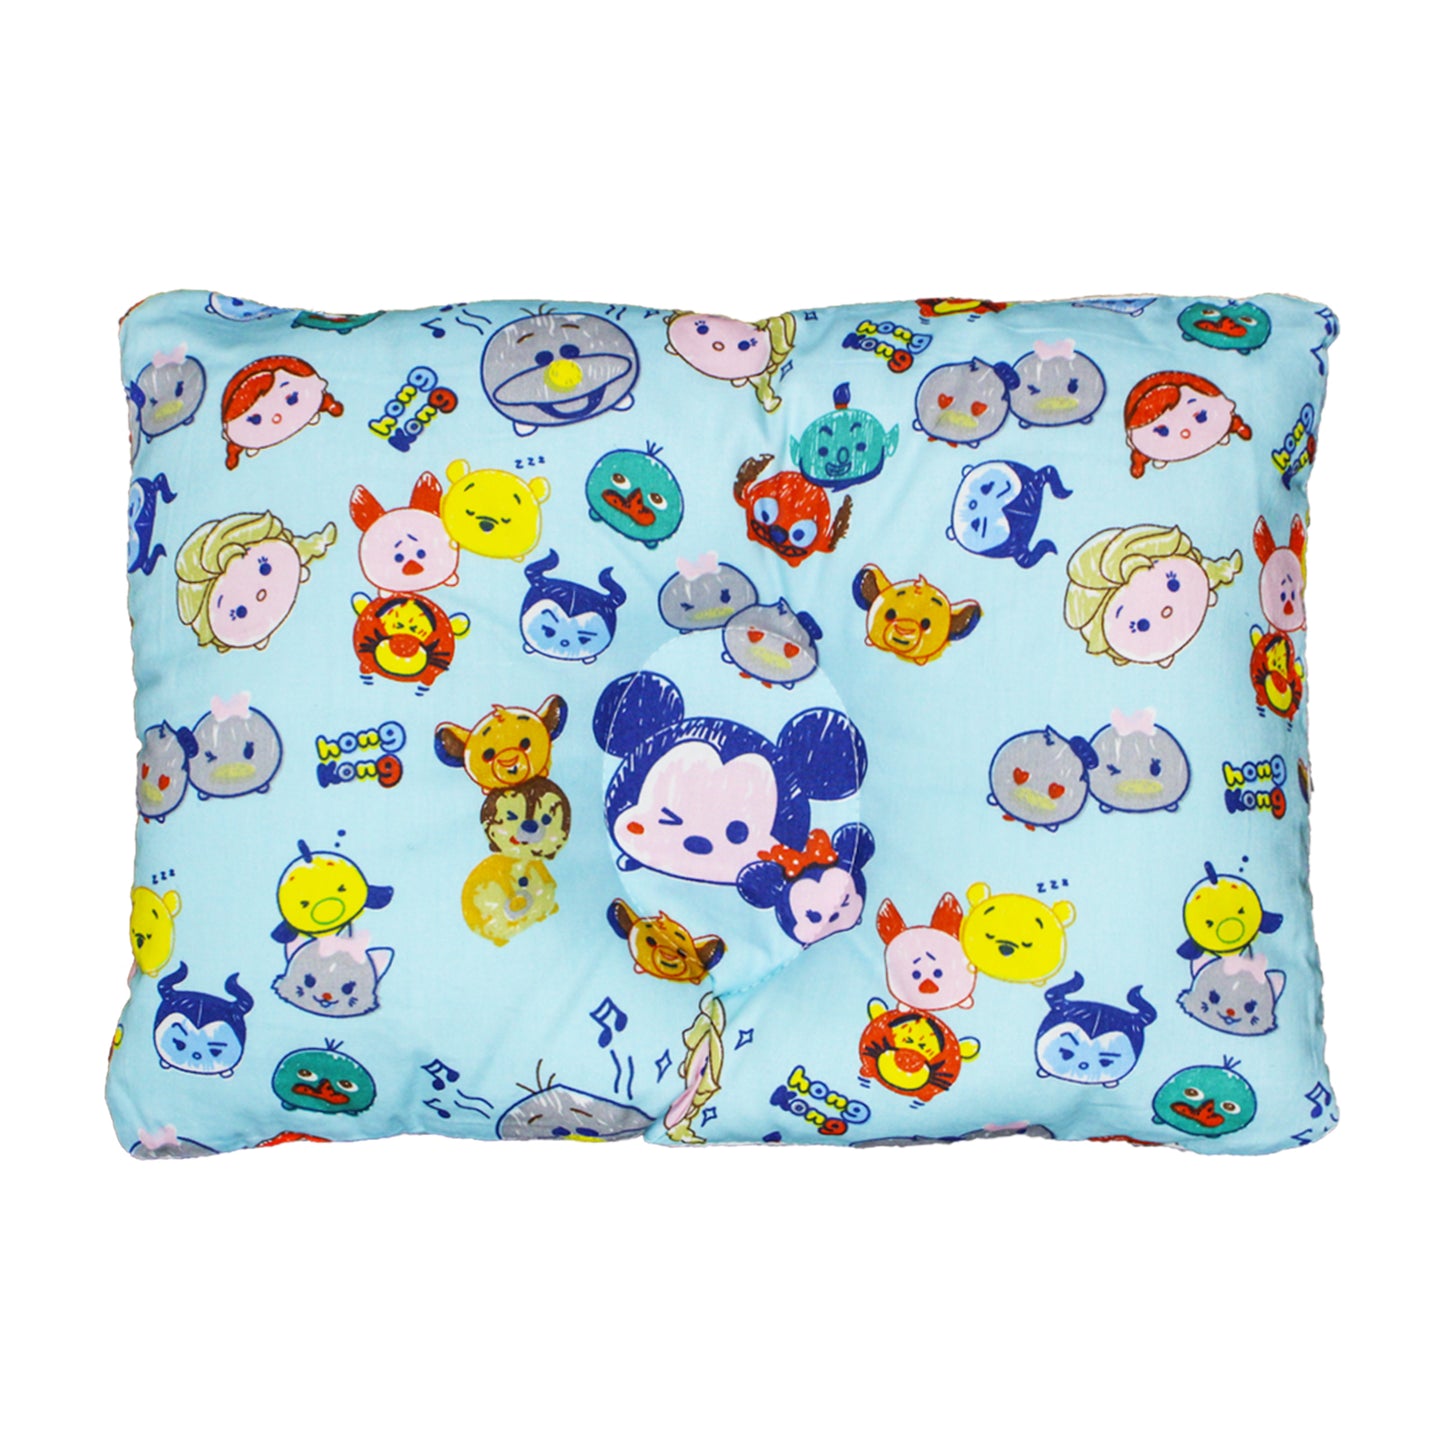 Soft Toddler Newborn Baby Head Pillows for Sleeping